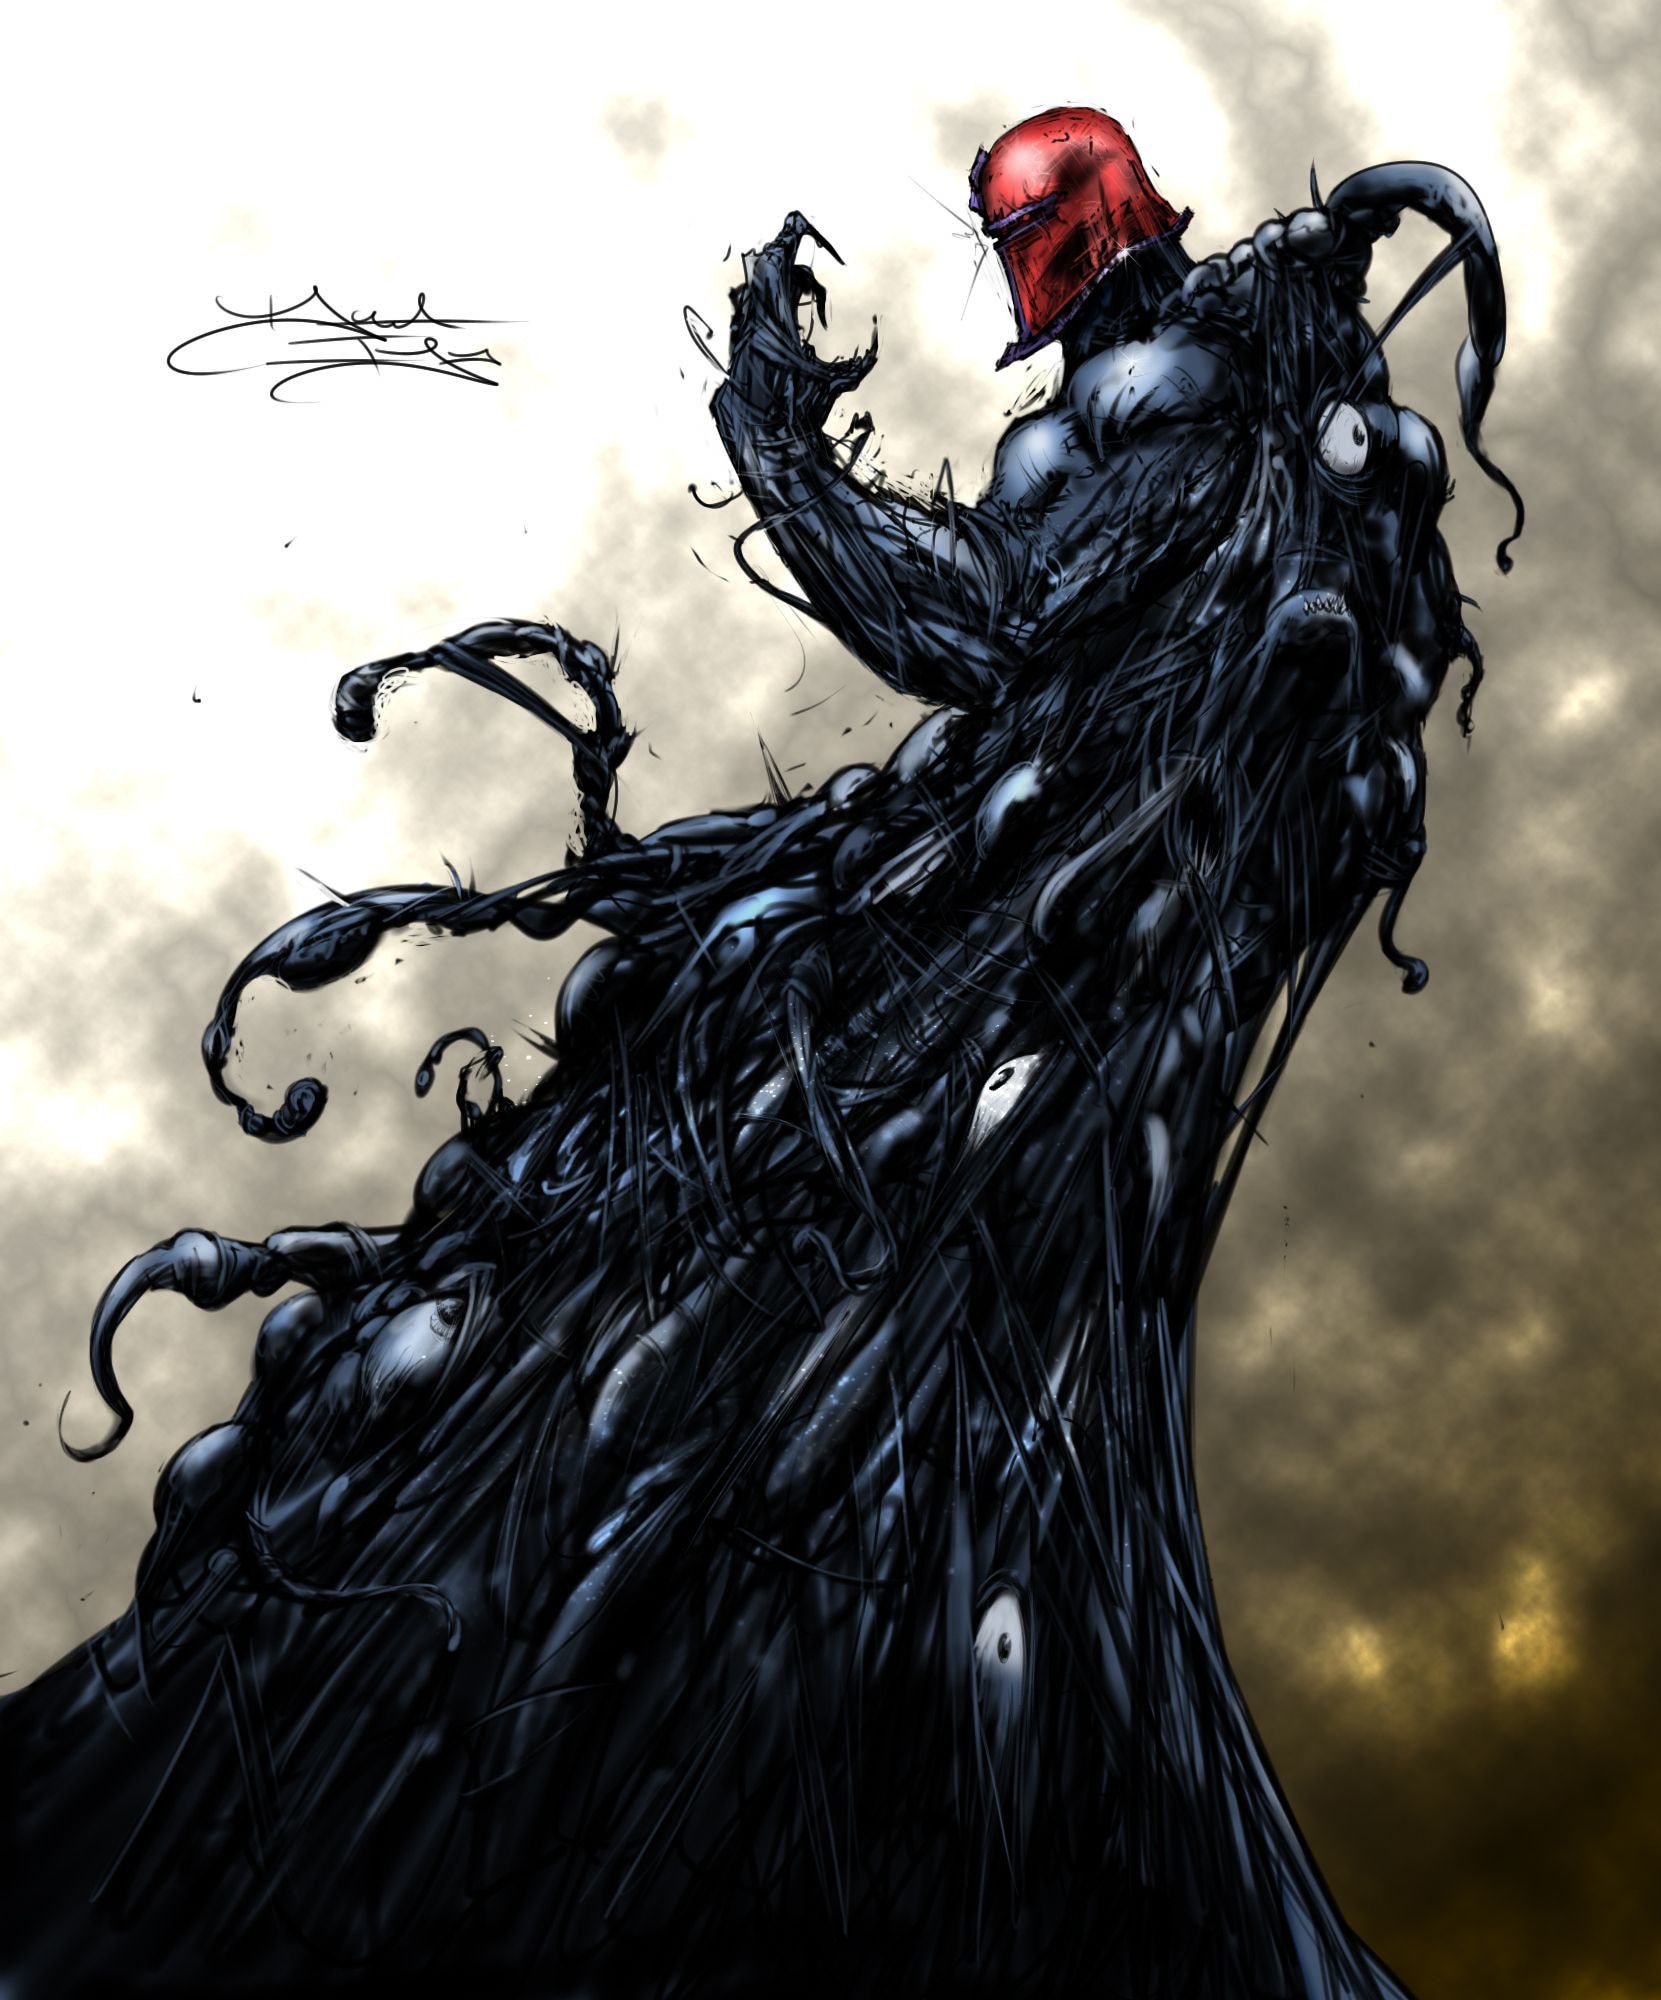 Wallpapers Windows Venom Movies And Magneto The Marvel Comics